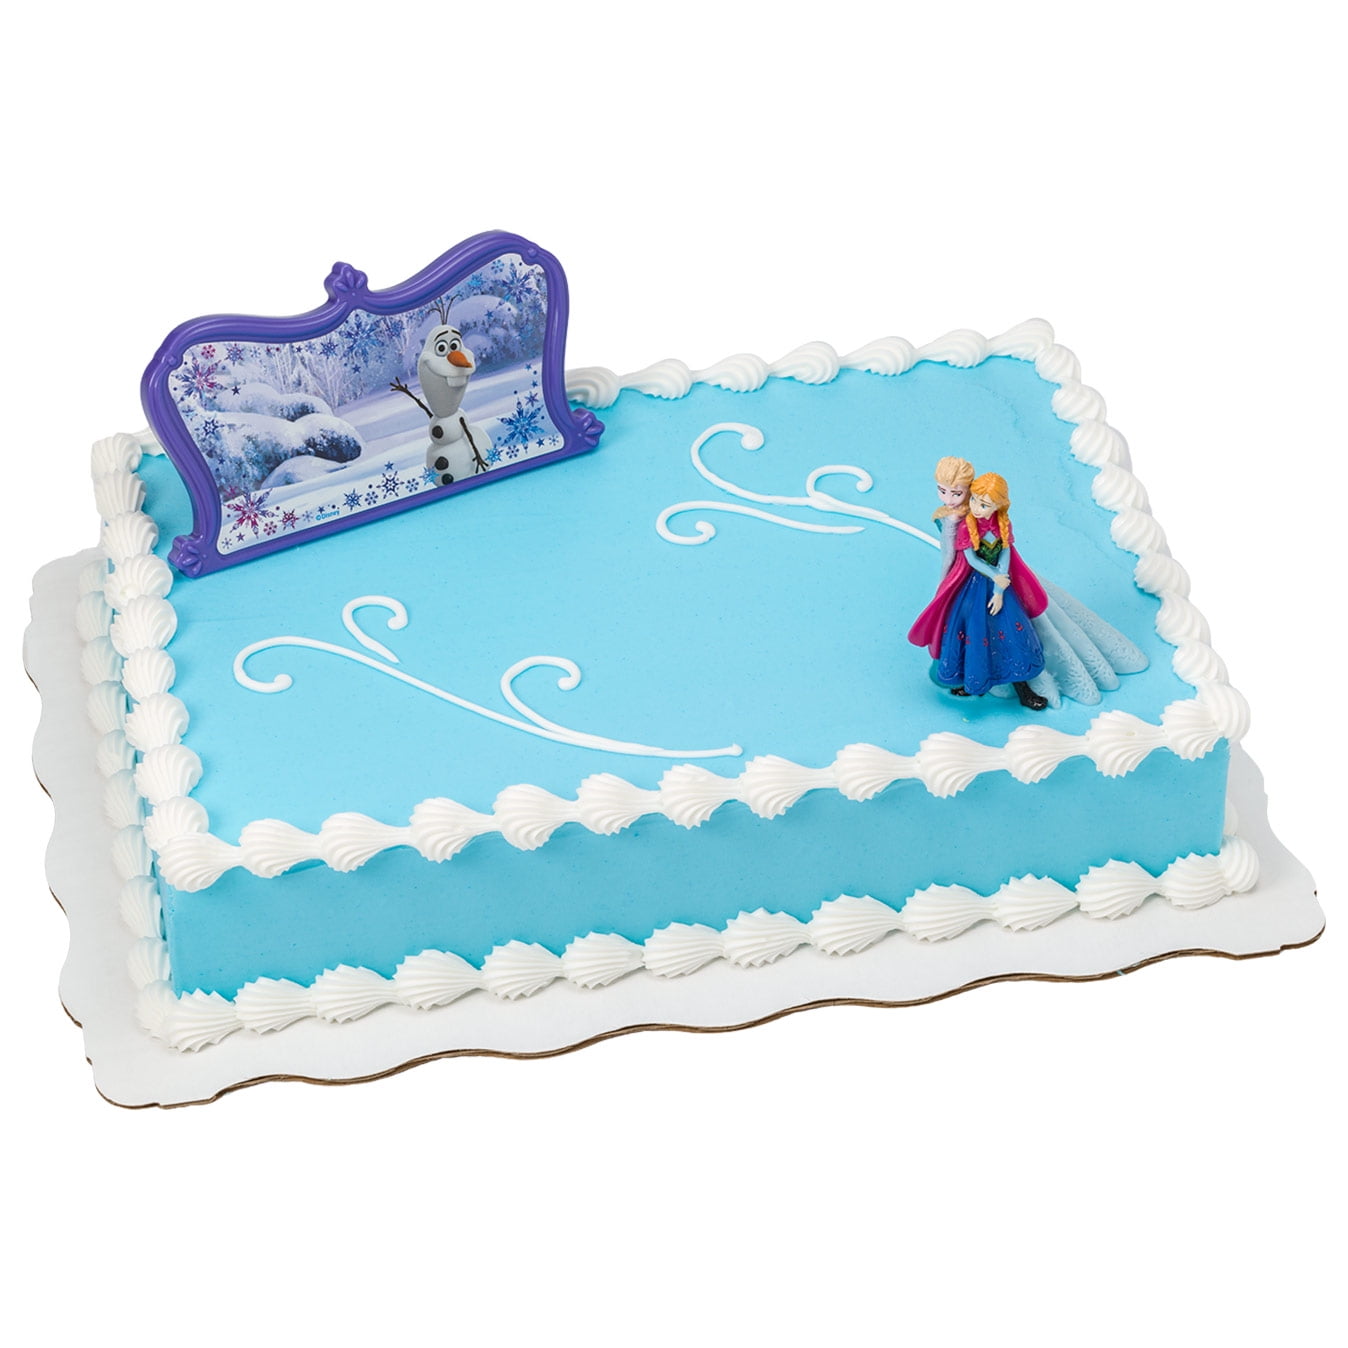 Disney Frozen Ii Mythical Journey Kit Sheet Cake Walmart Com Walmart Com